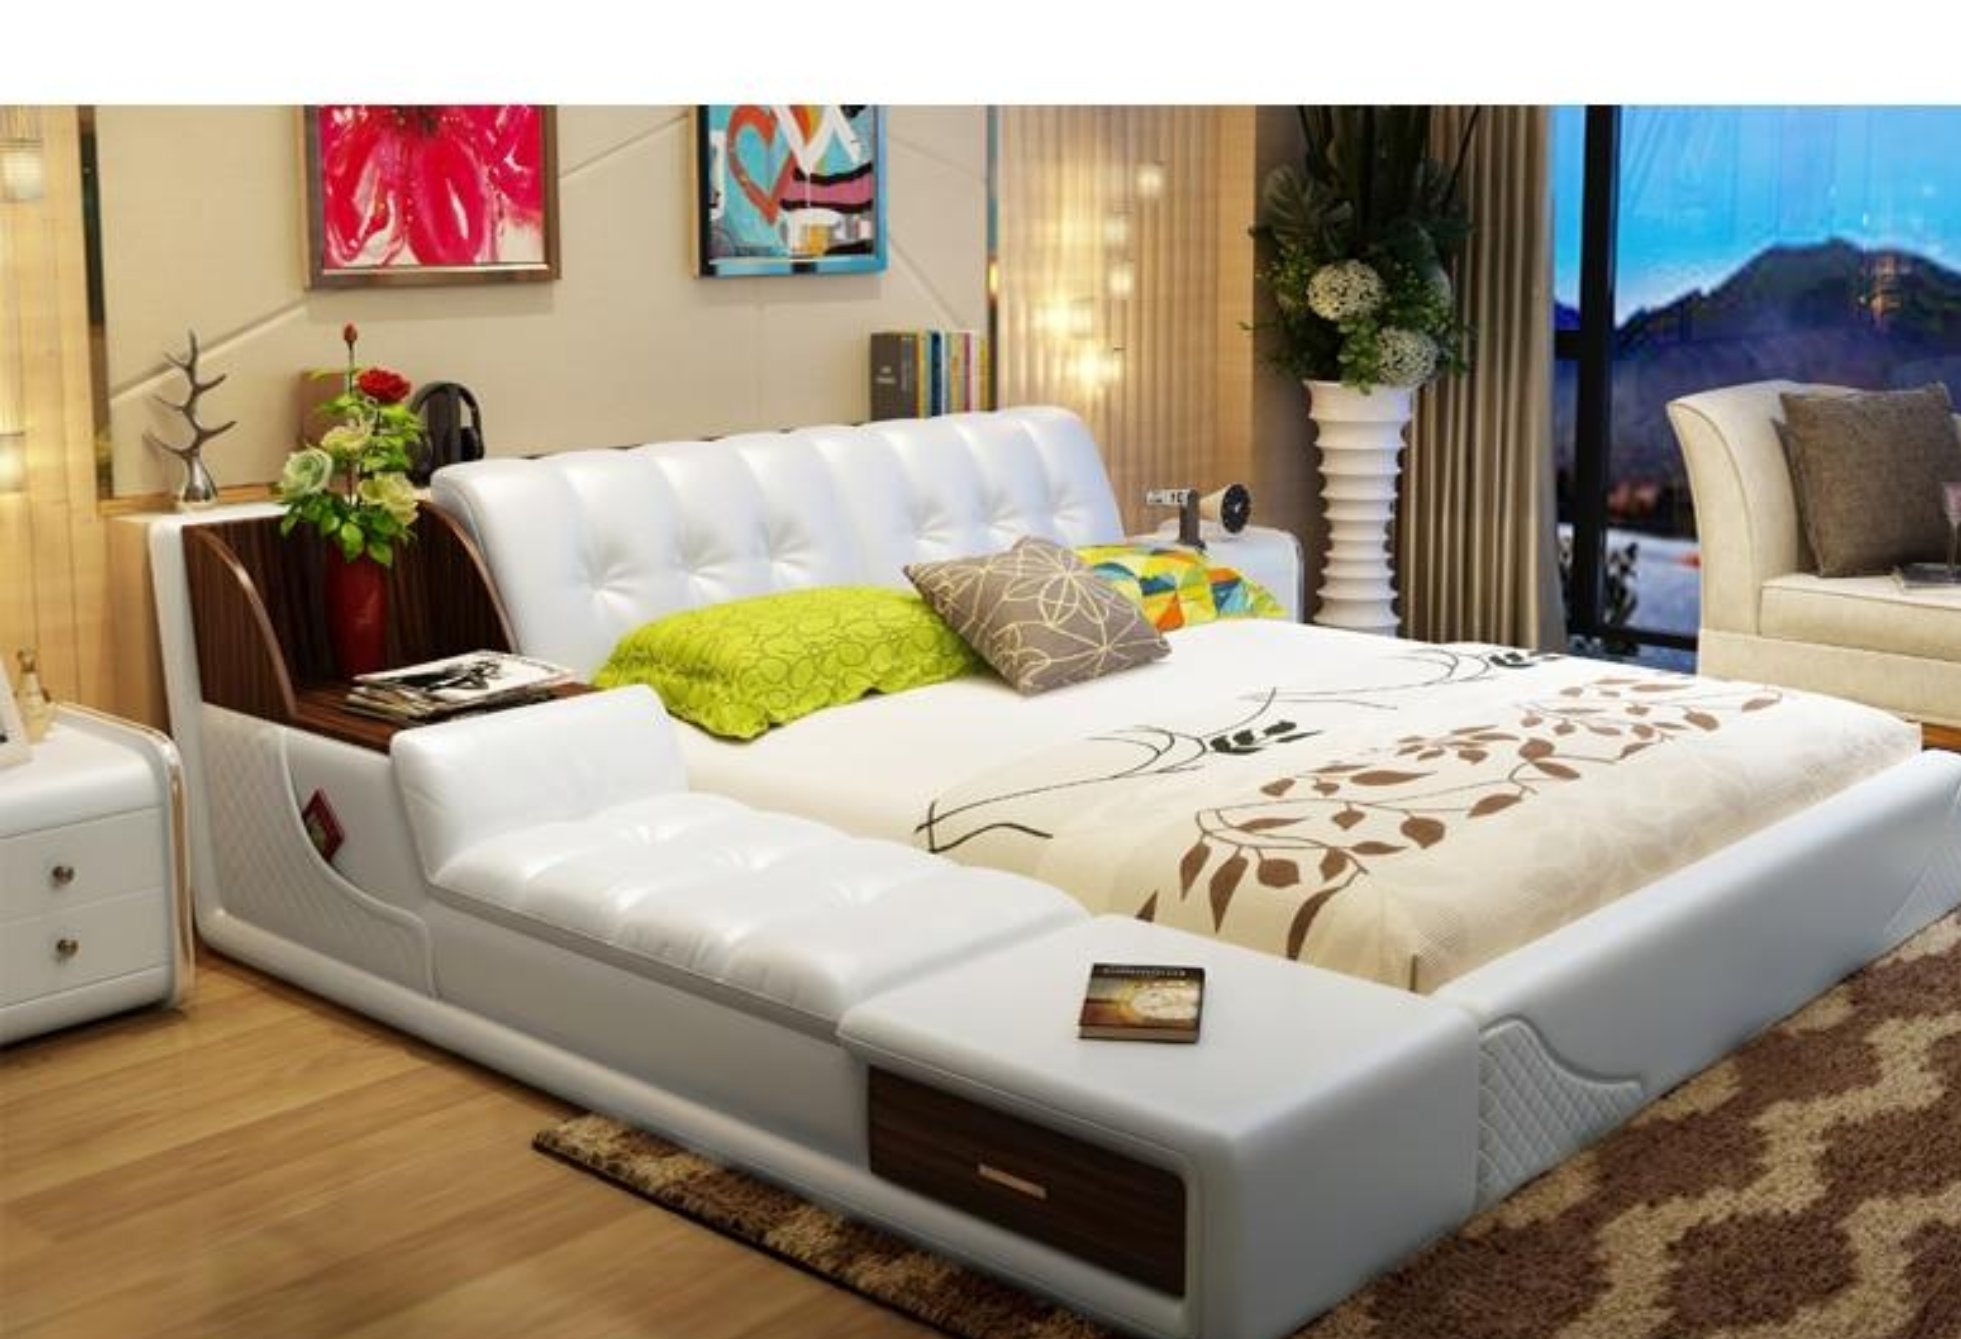 Real Genuine Leather Bed Frame Modern Soft Beds With Storage Home Bedroom Furniture Cama Muebles De F896b0f0 076c 49c3 Be6e 77c00cdf4c57 ?v=1571439391